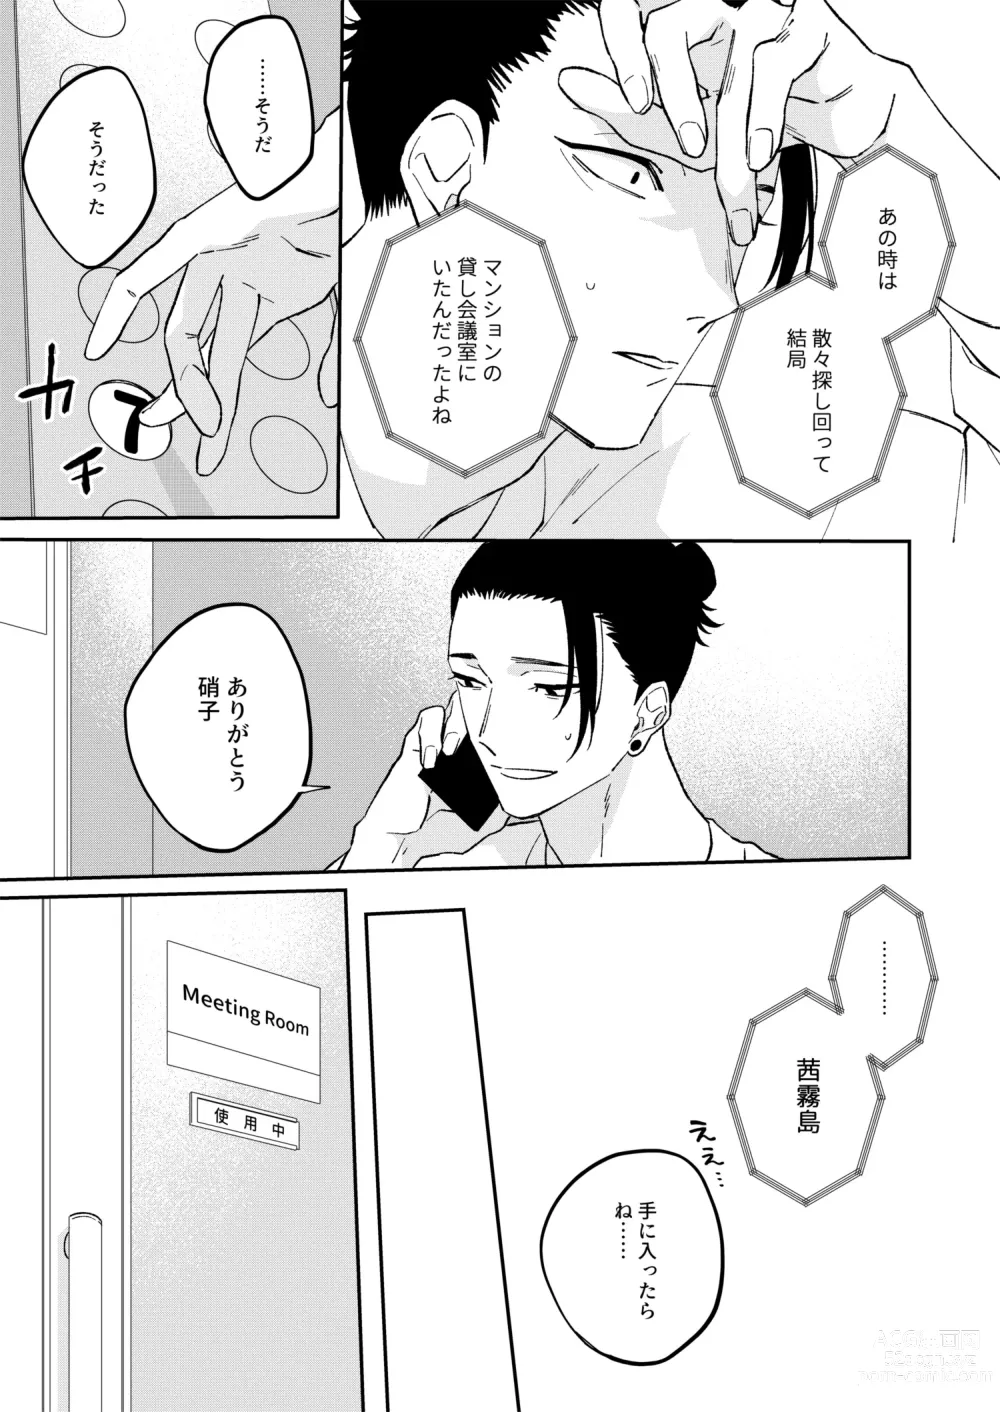 Page 13 of doujinshi GeGo wa Genjitsu nanode Scandal NG desu!!!